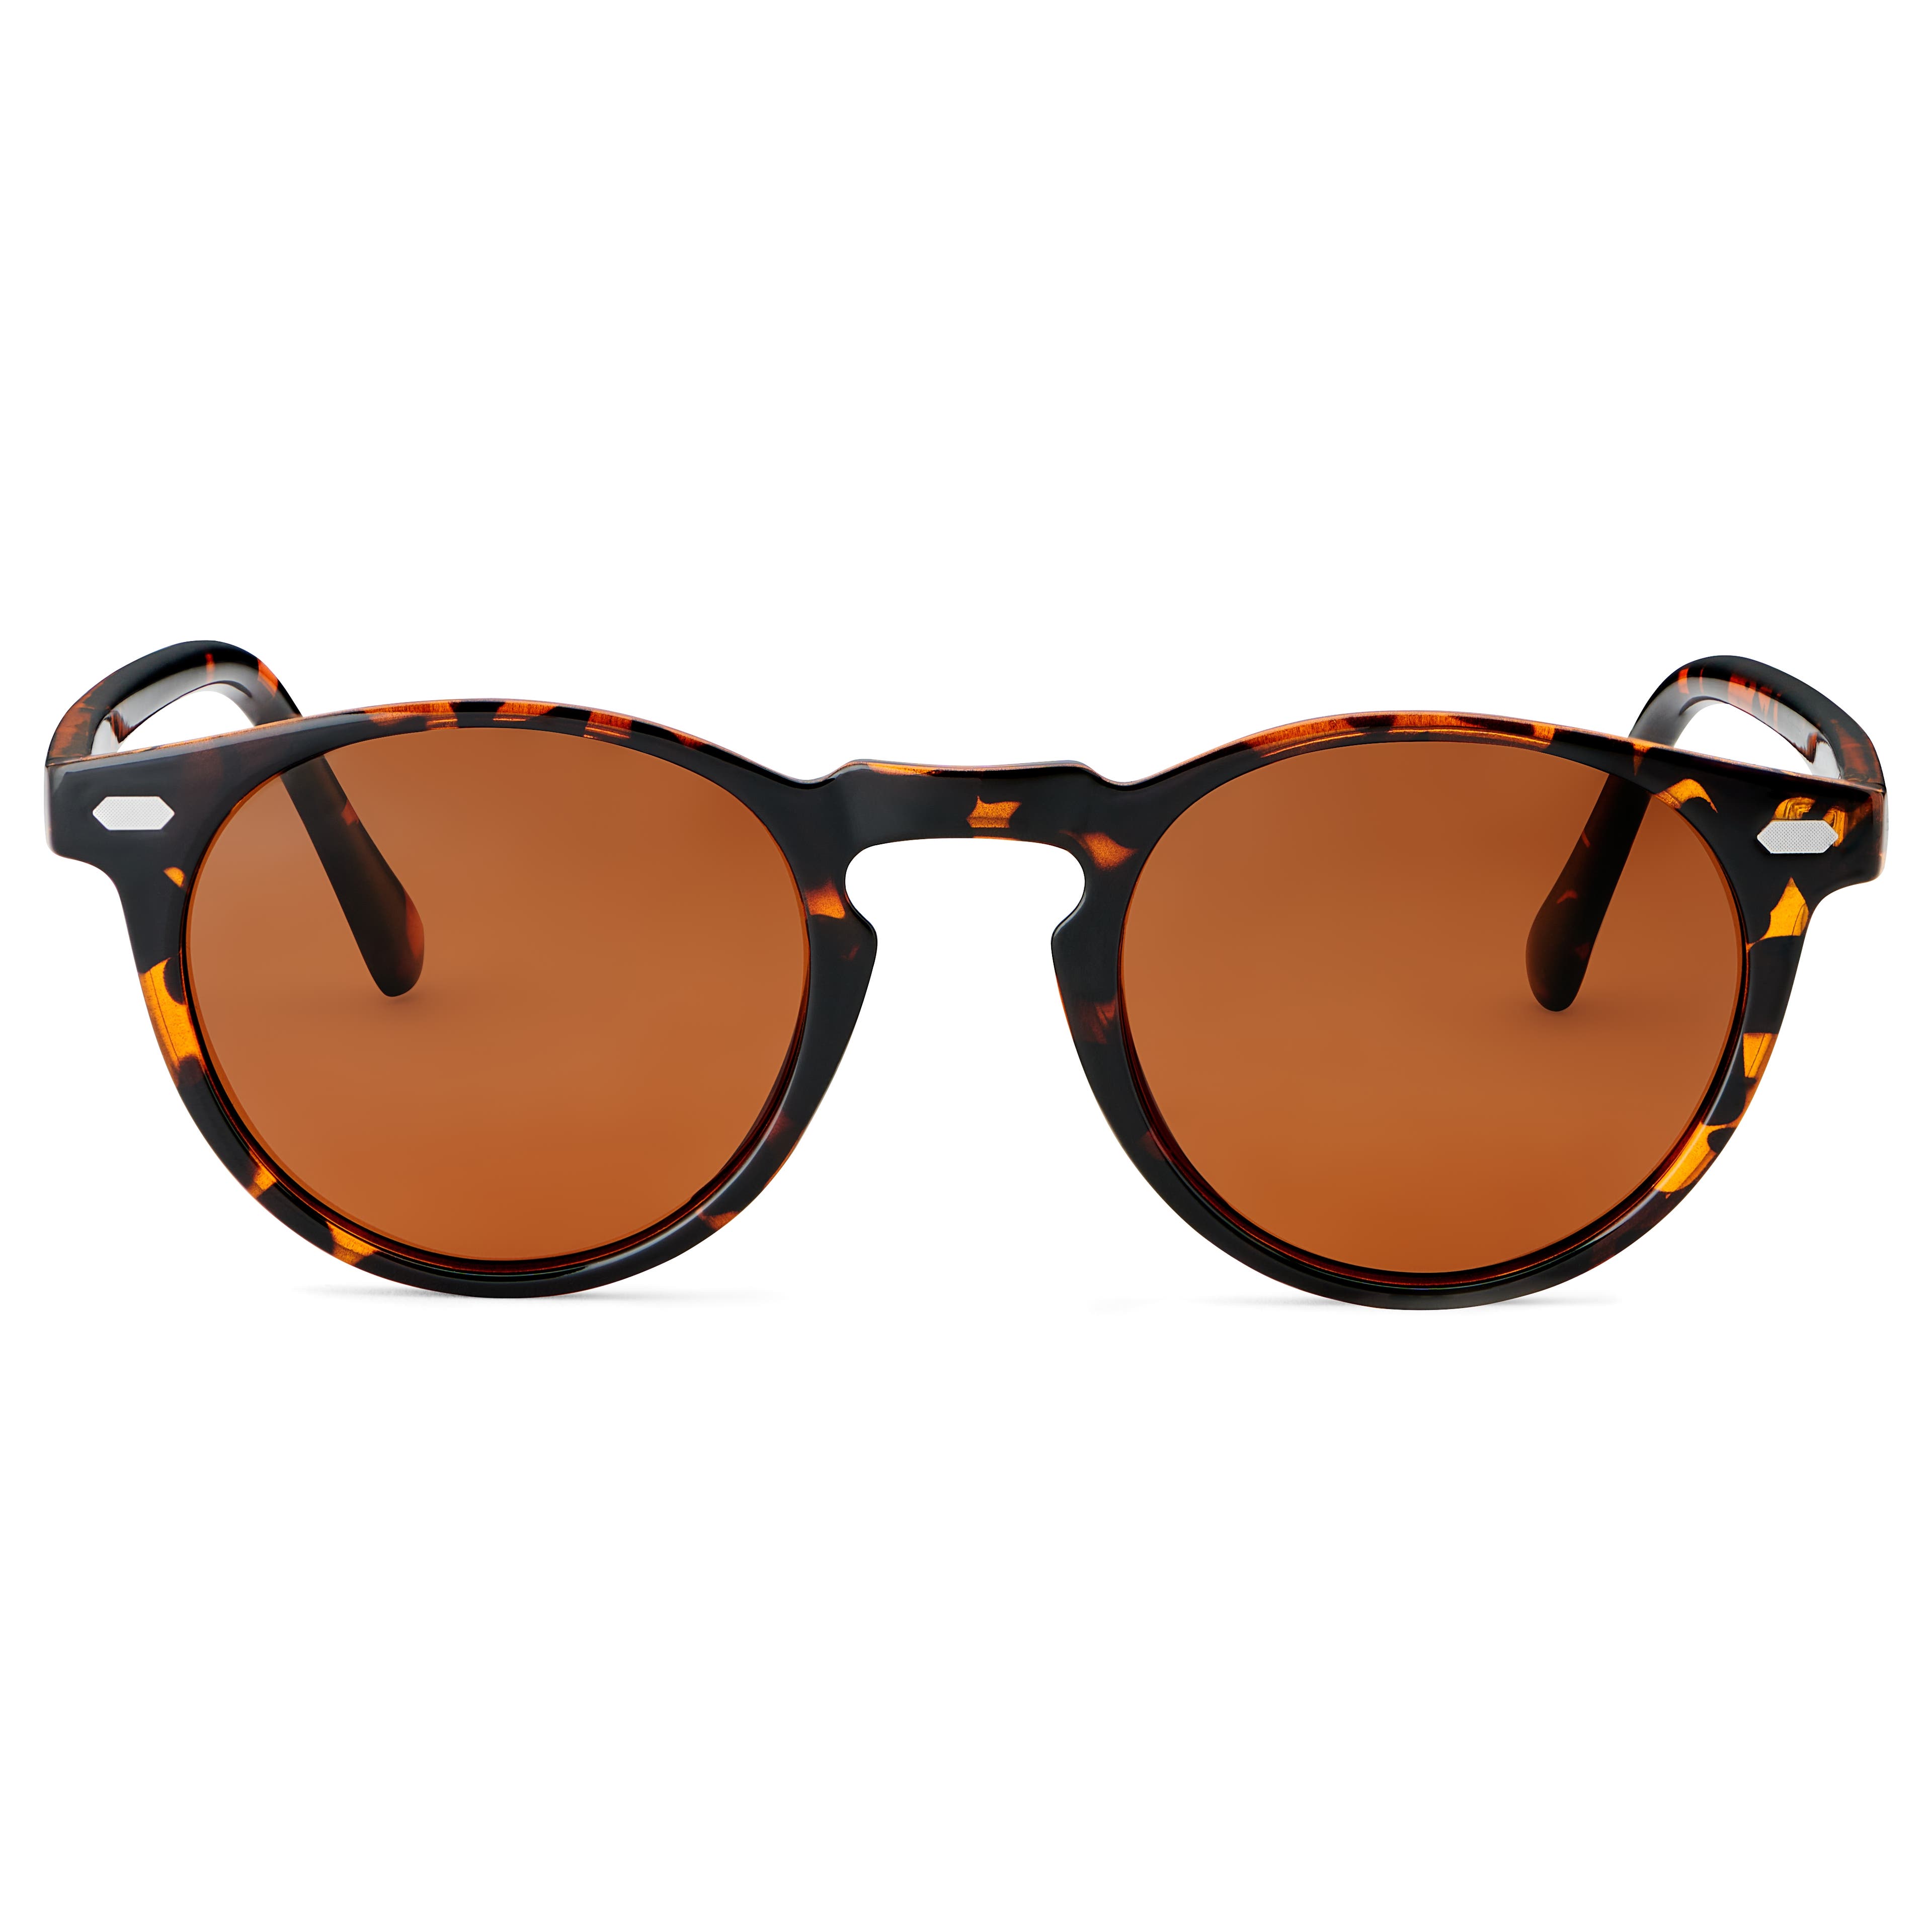 Retro Polarised Round Tortoiseshell Sunglasses